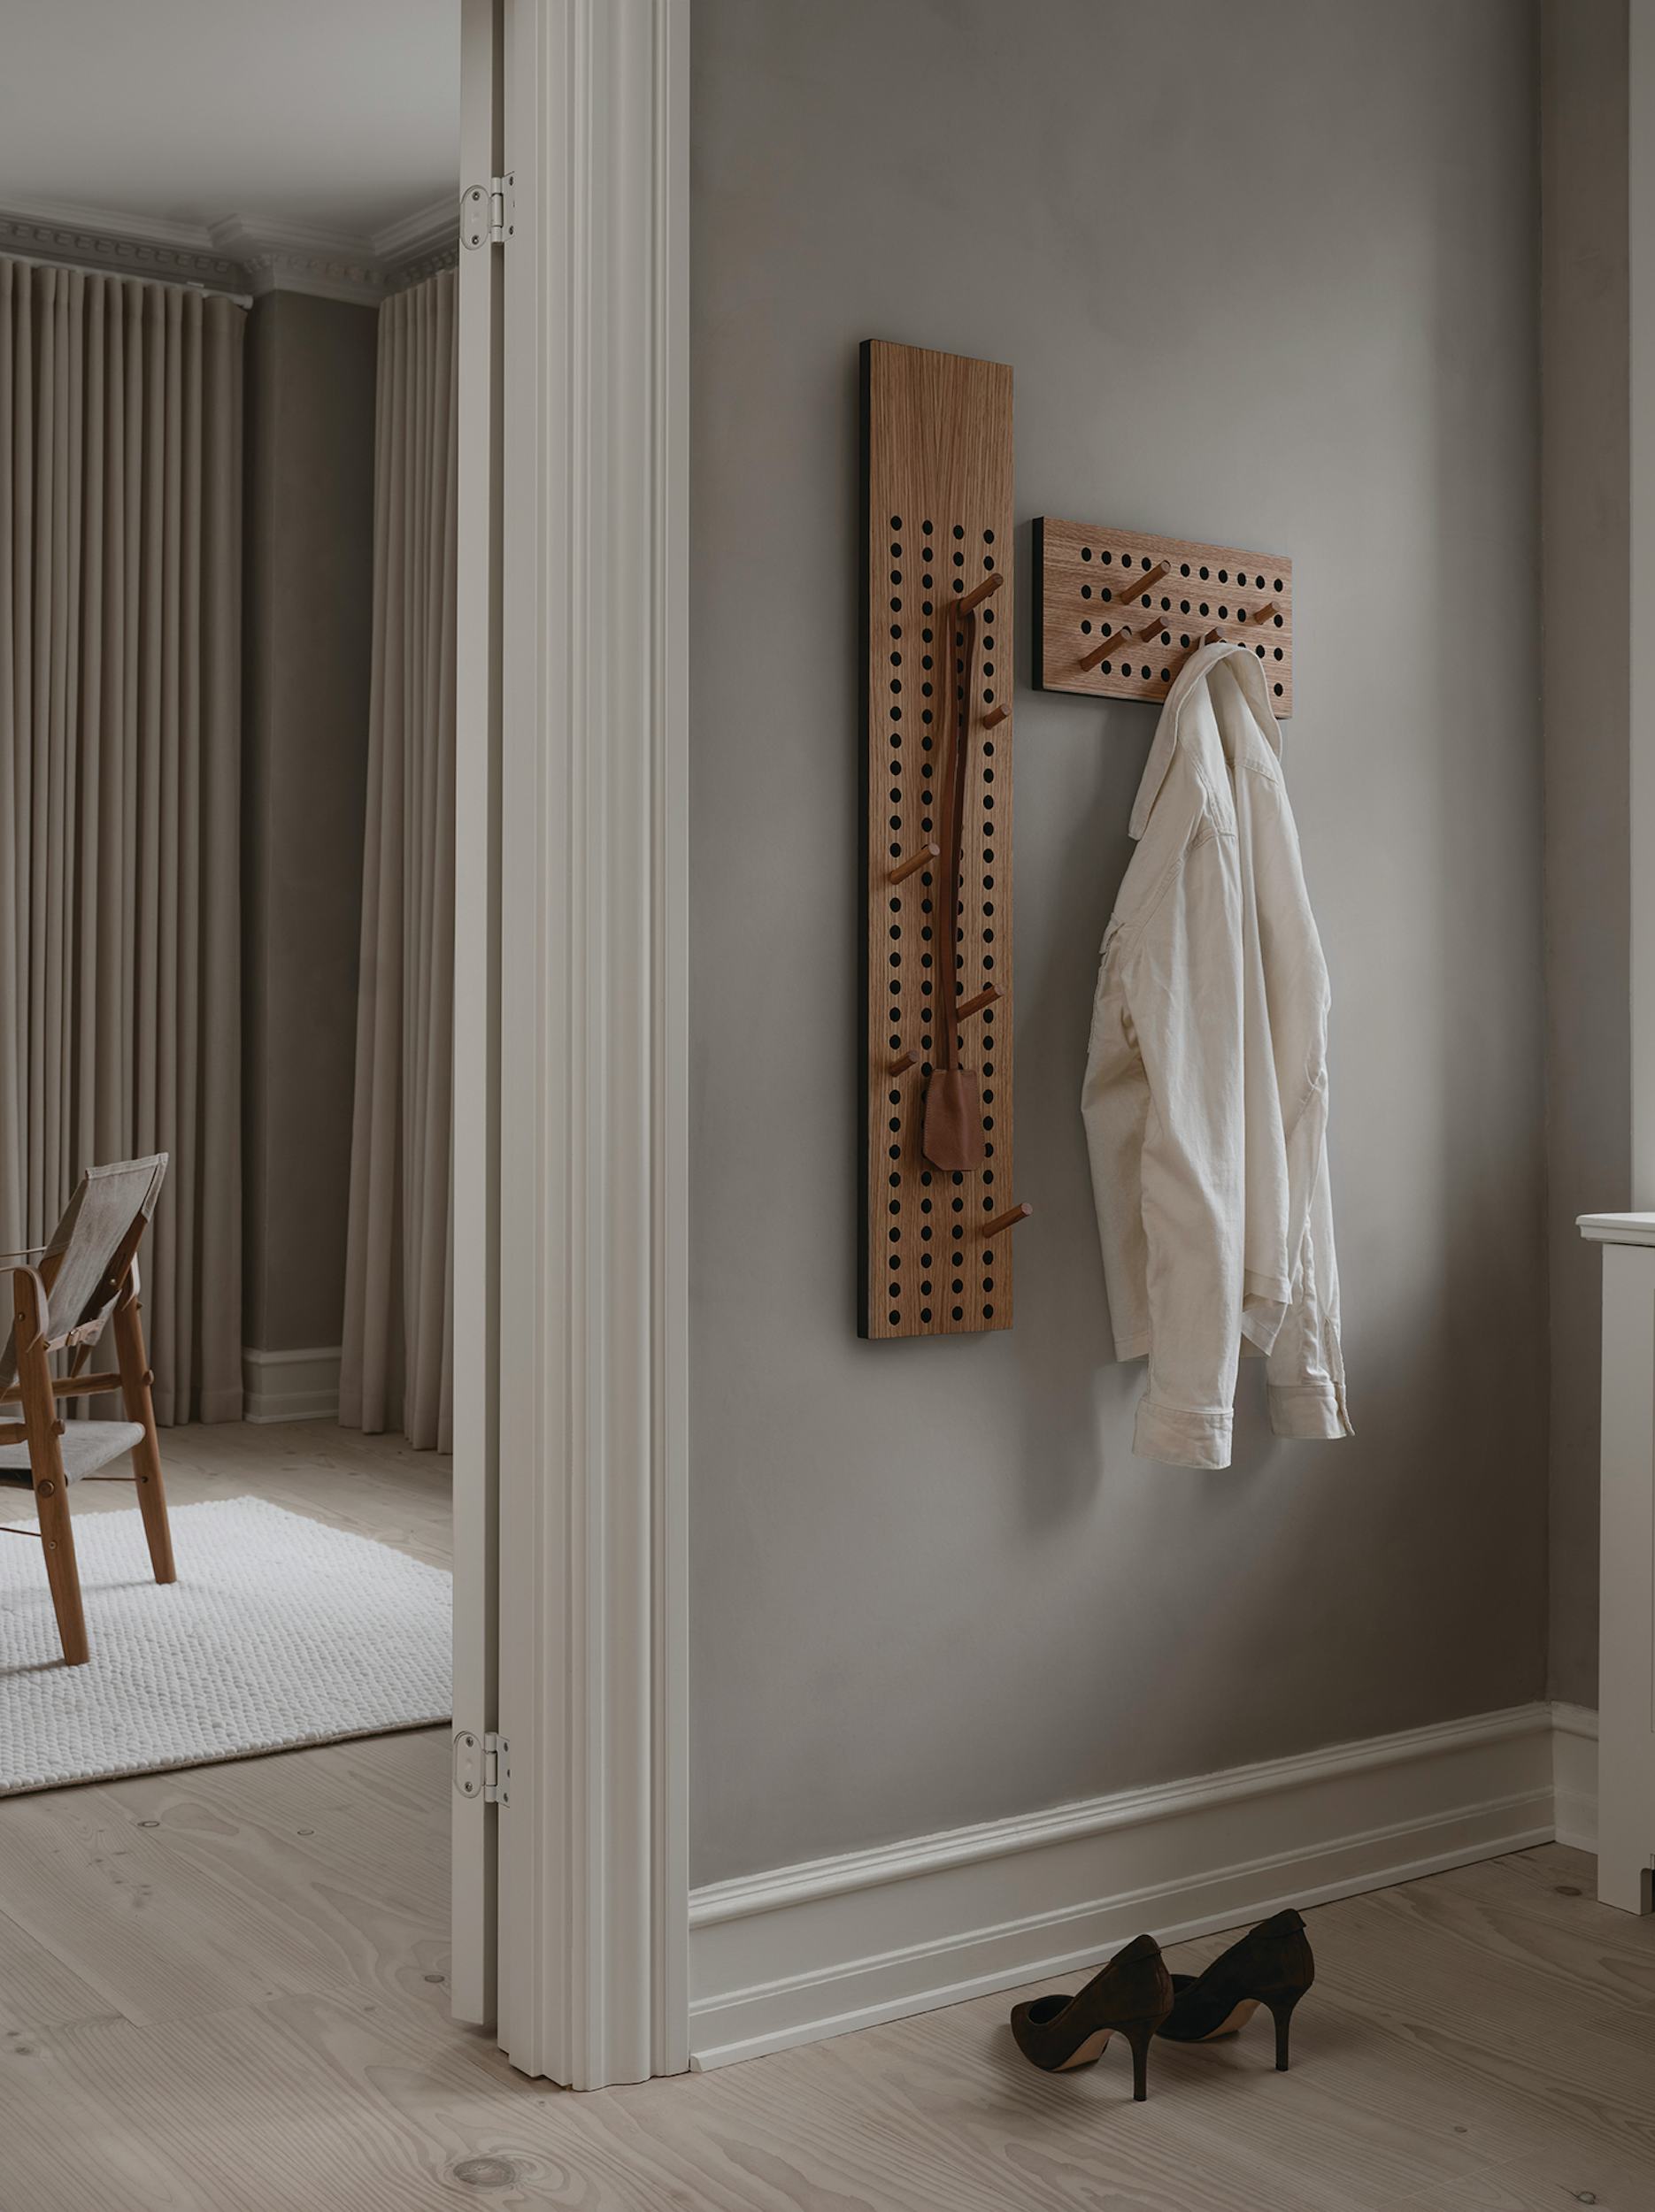 Coat Hanger in core leather I Danish design for your hallway